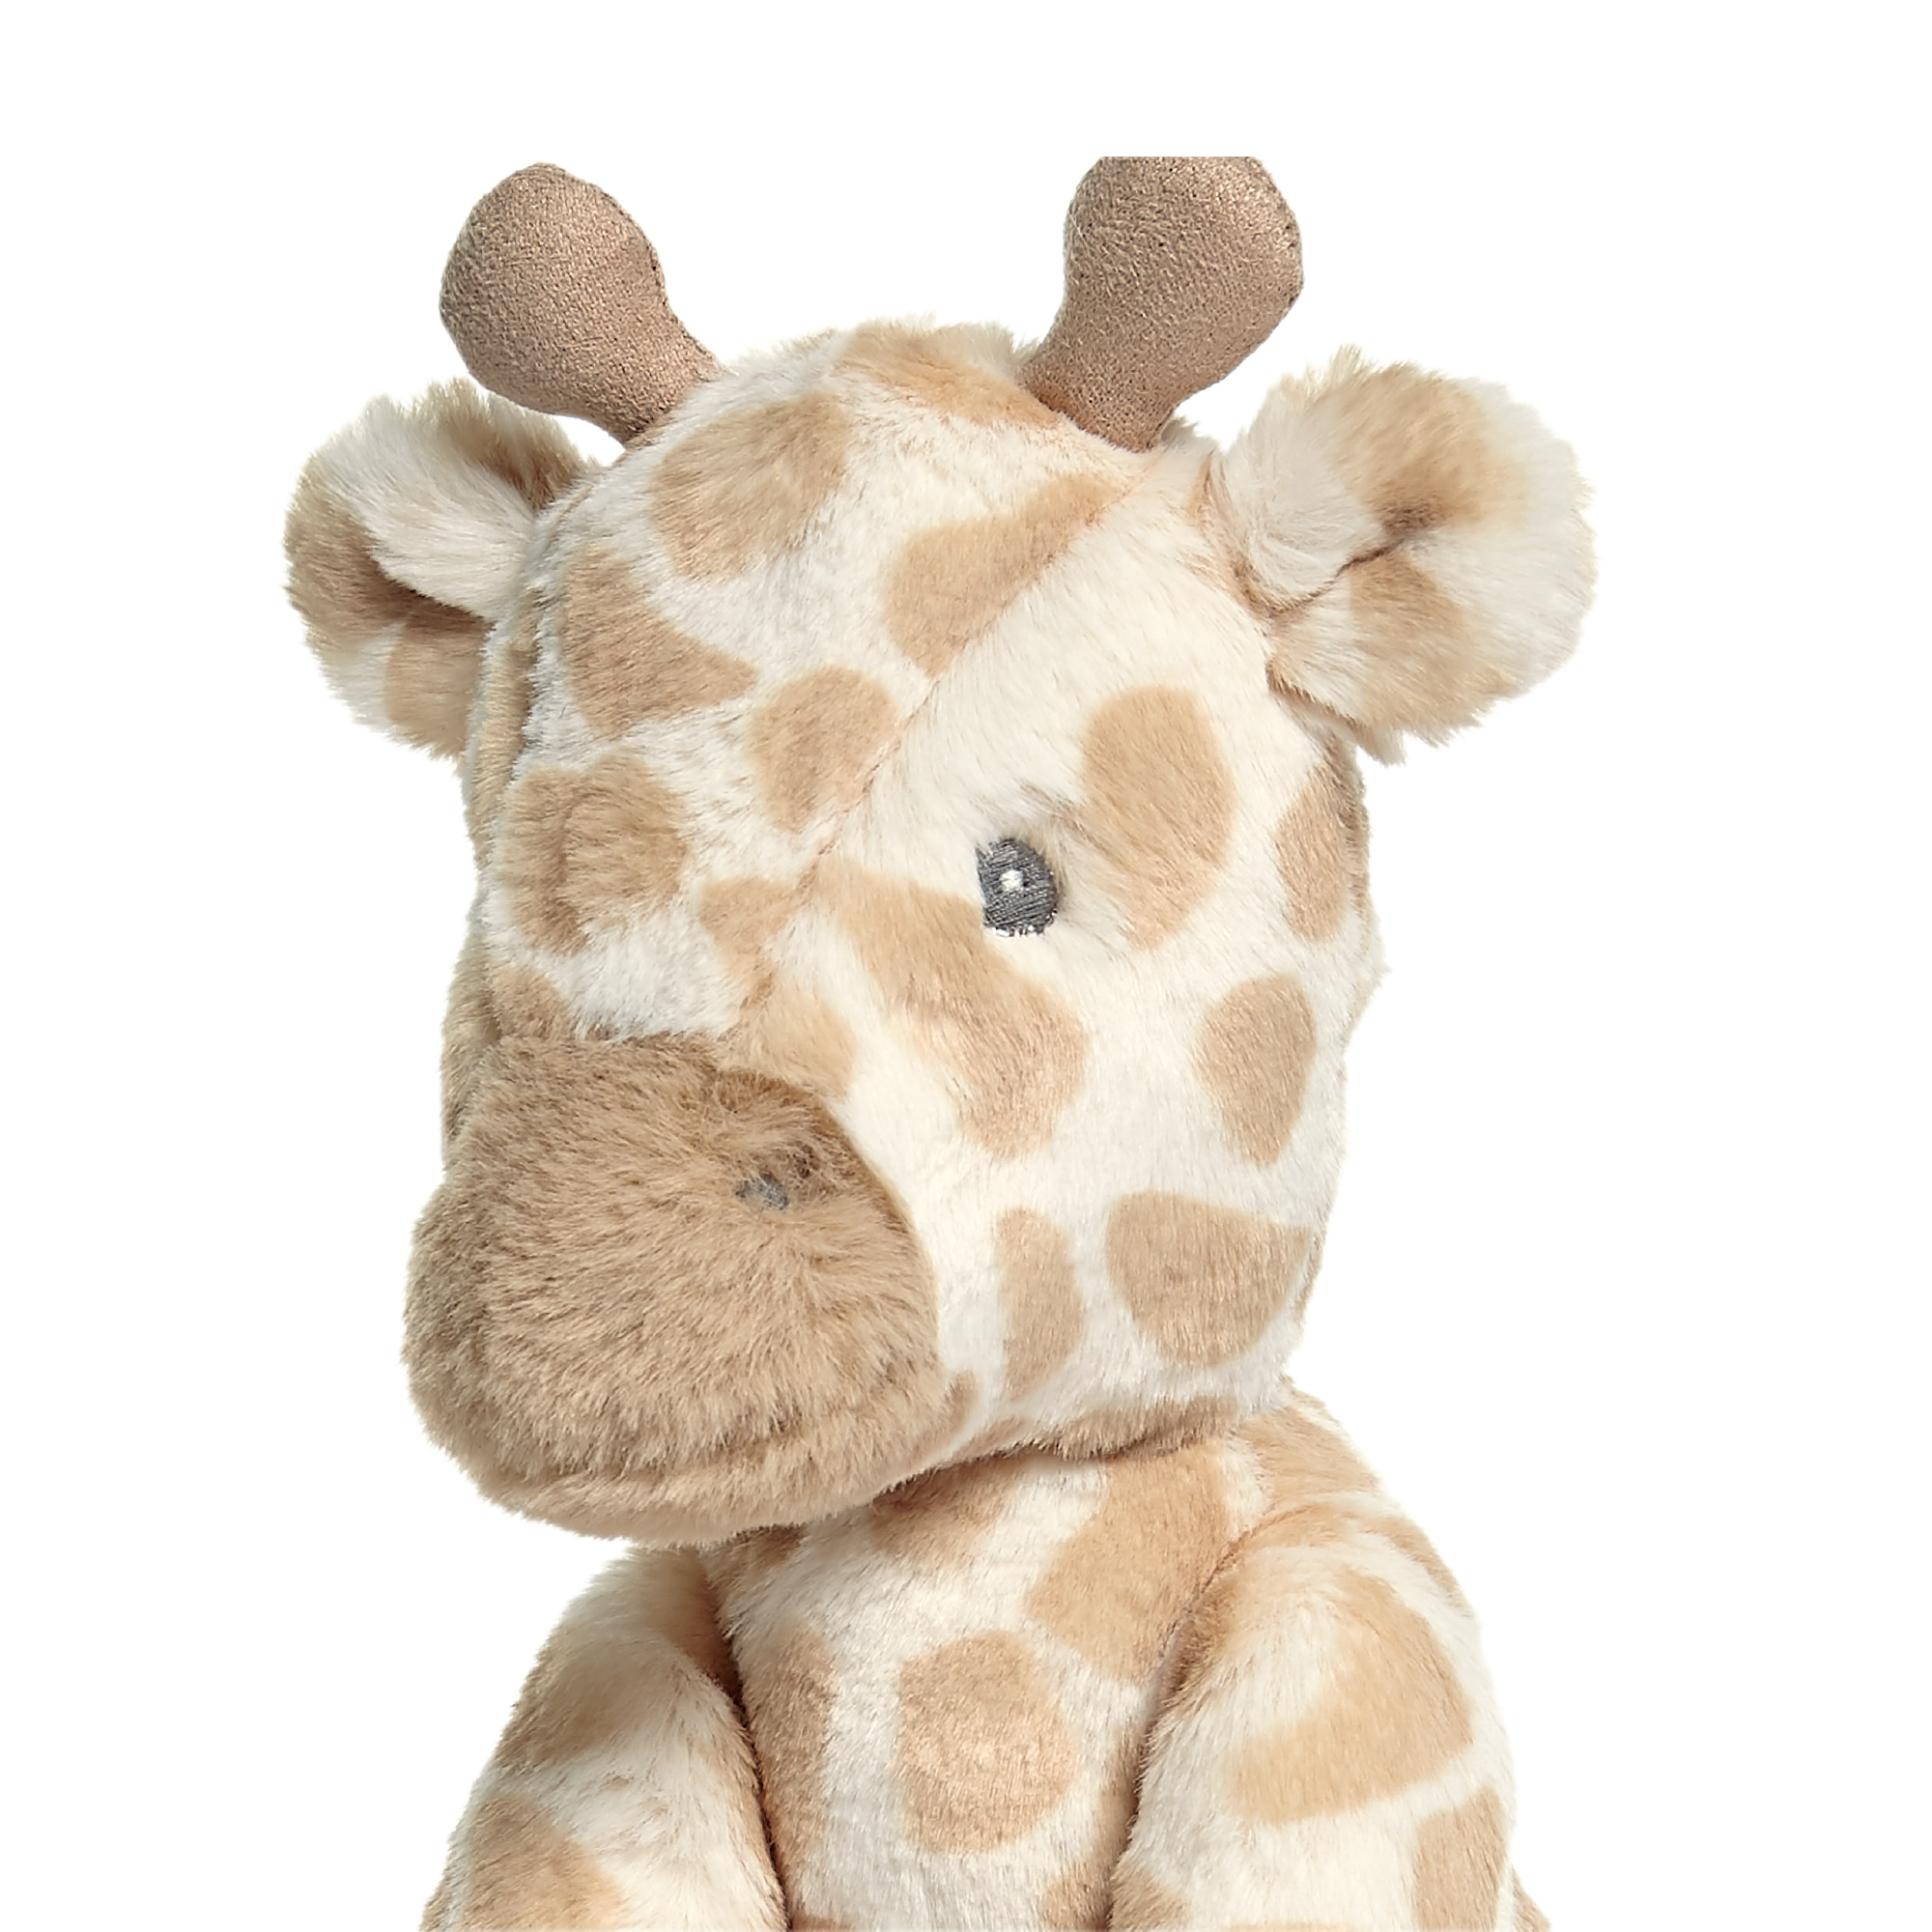 Mamas & Papas Welcome to the World Soft Toy - Geoffrey Giraffe